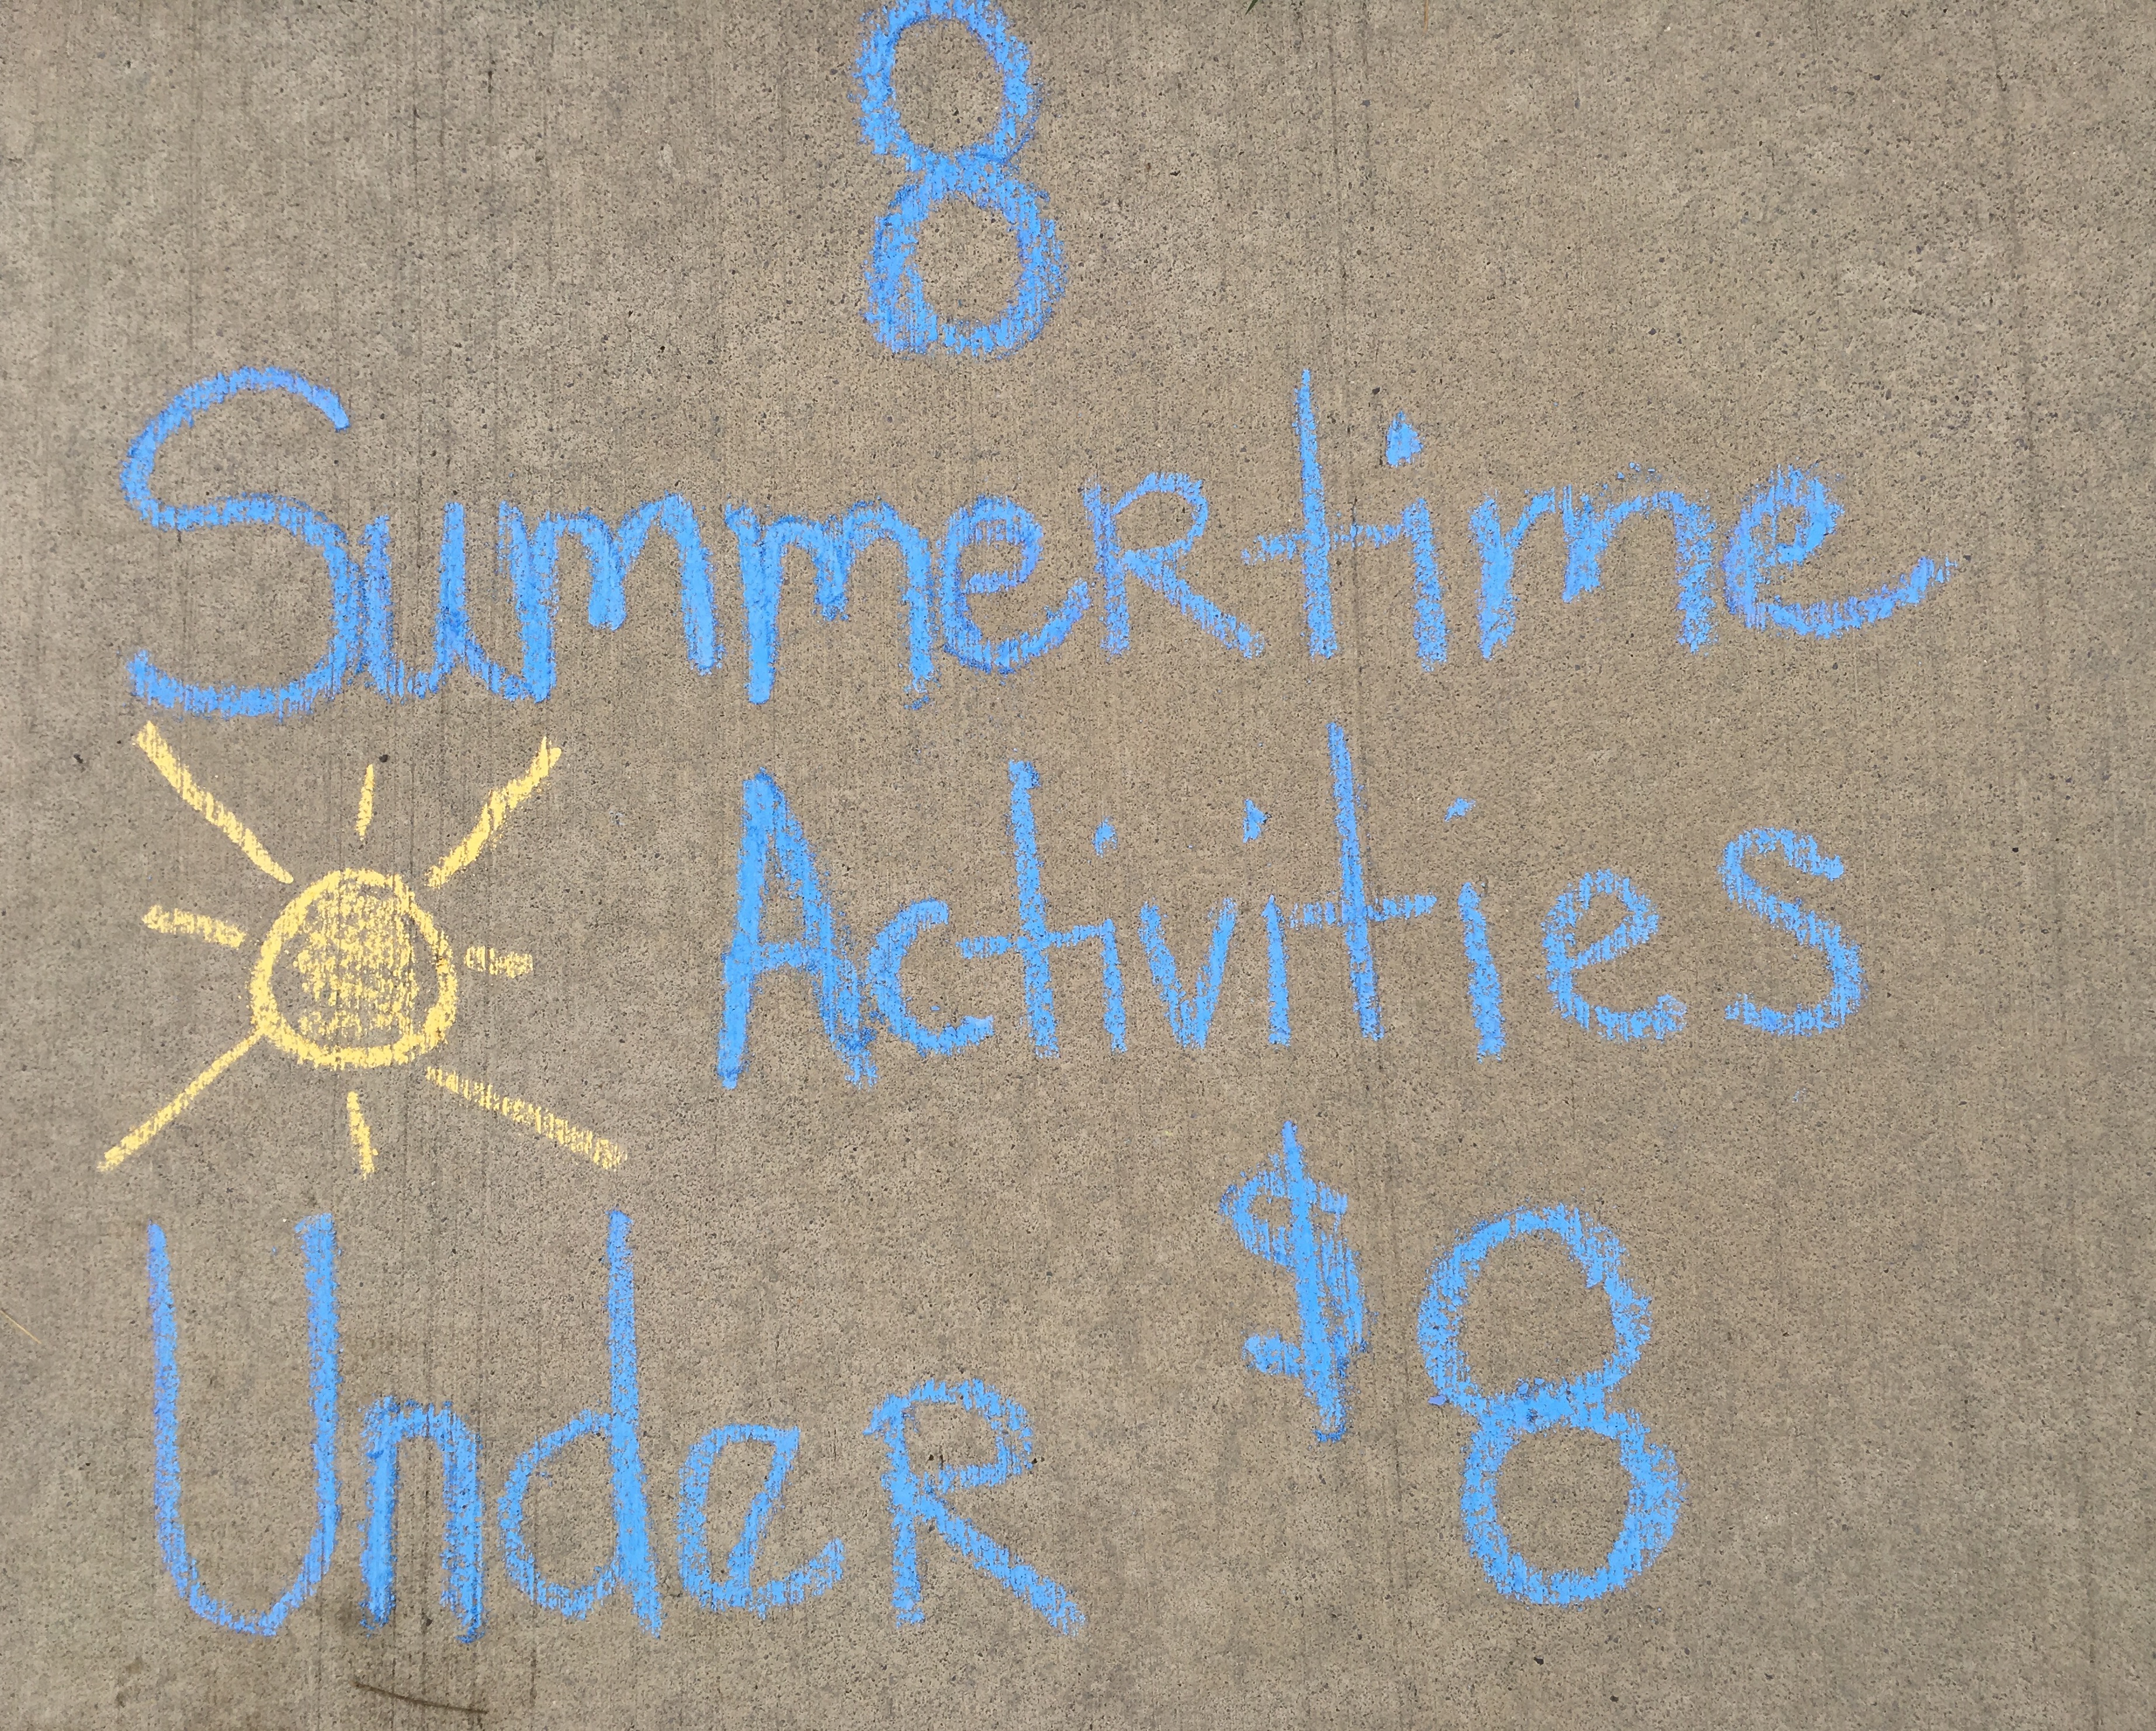 8 summertime actives under $8